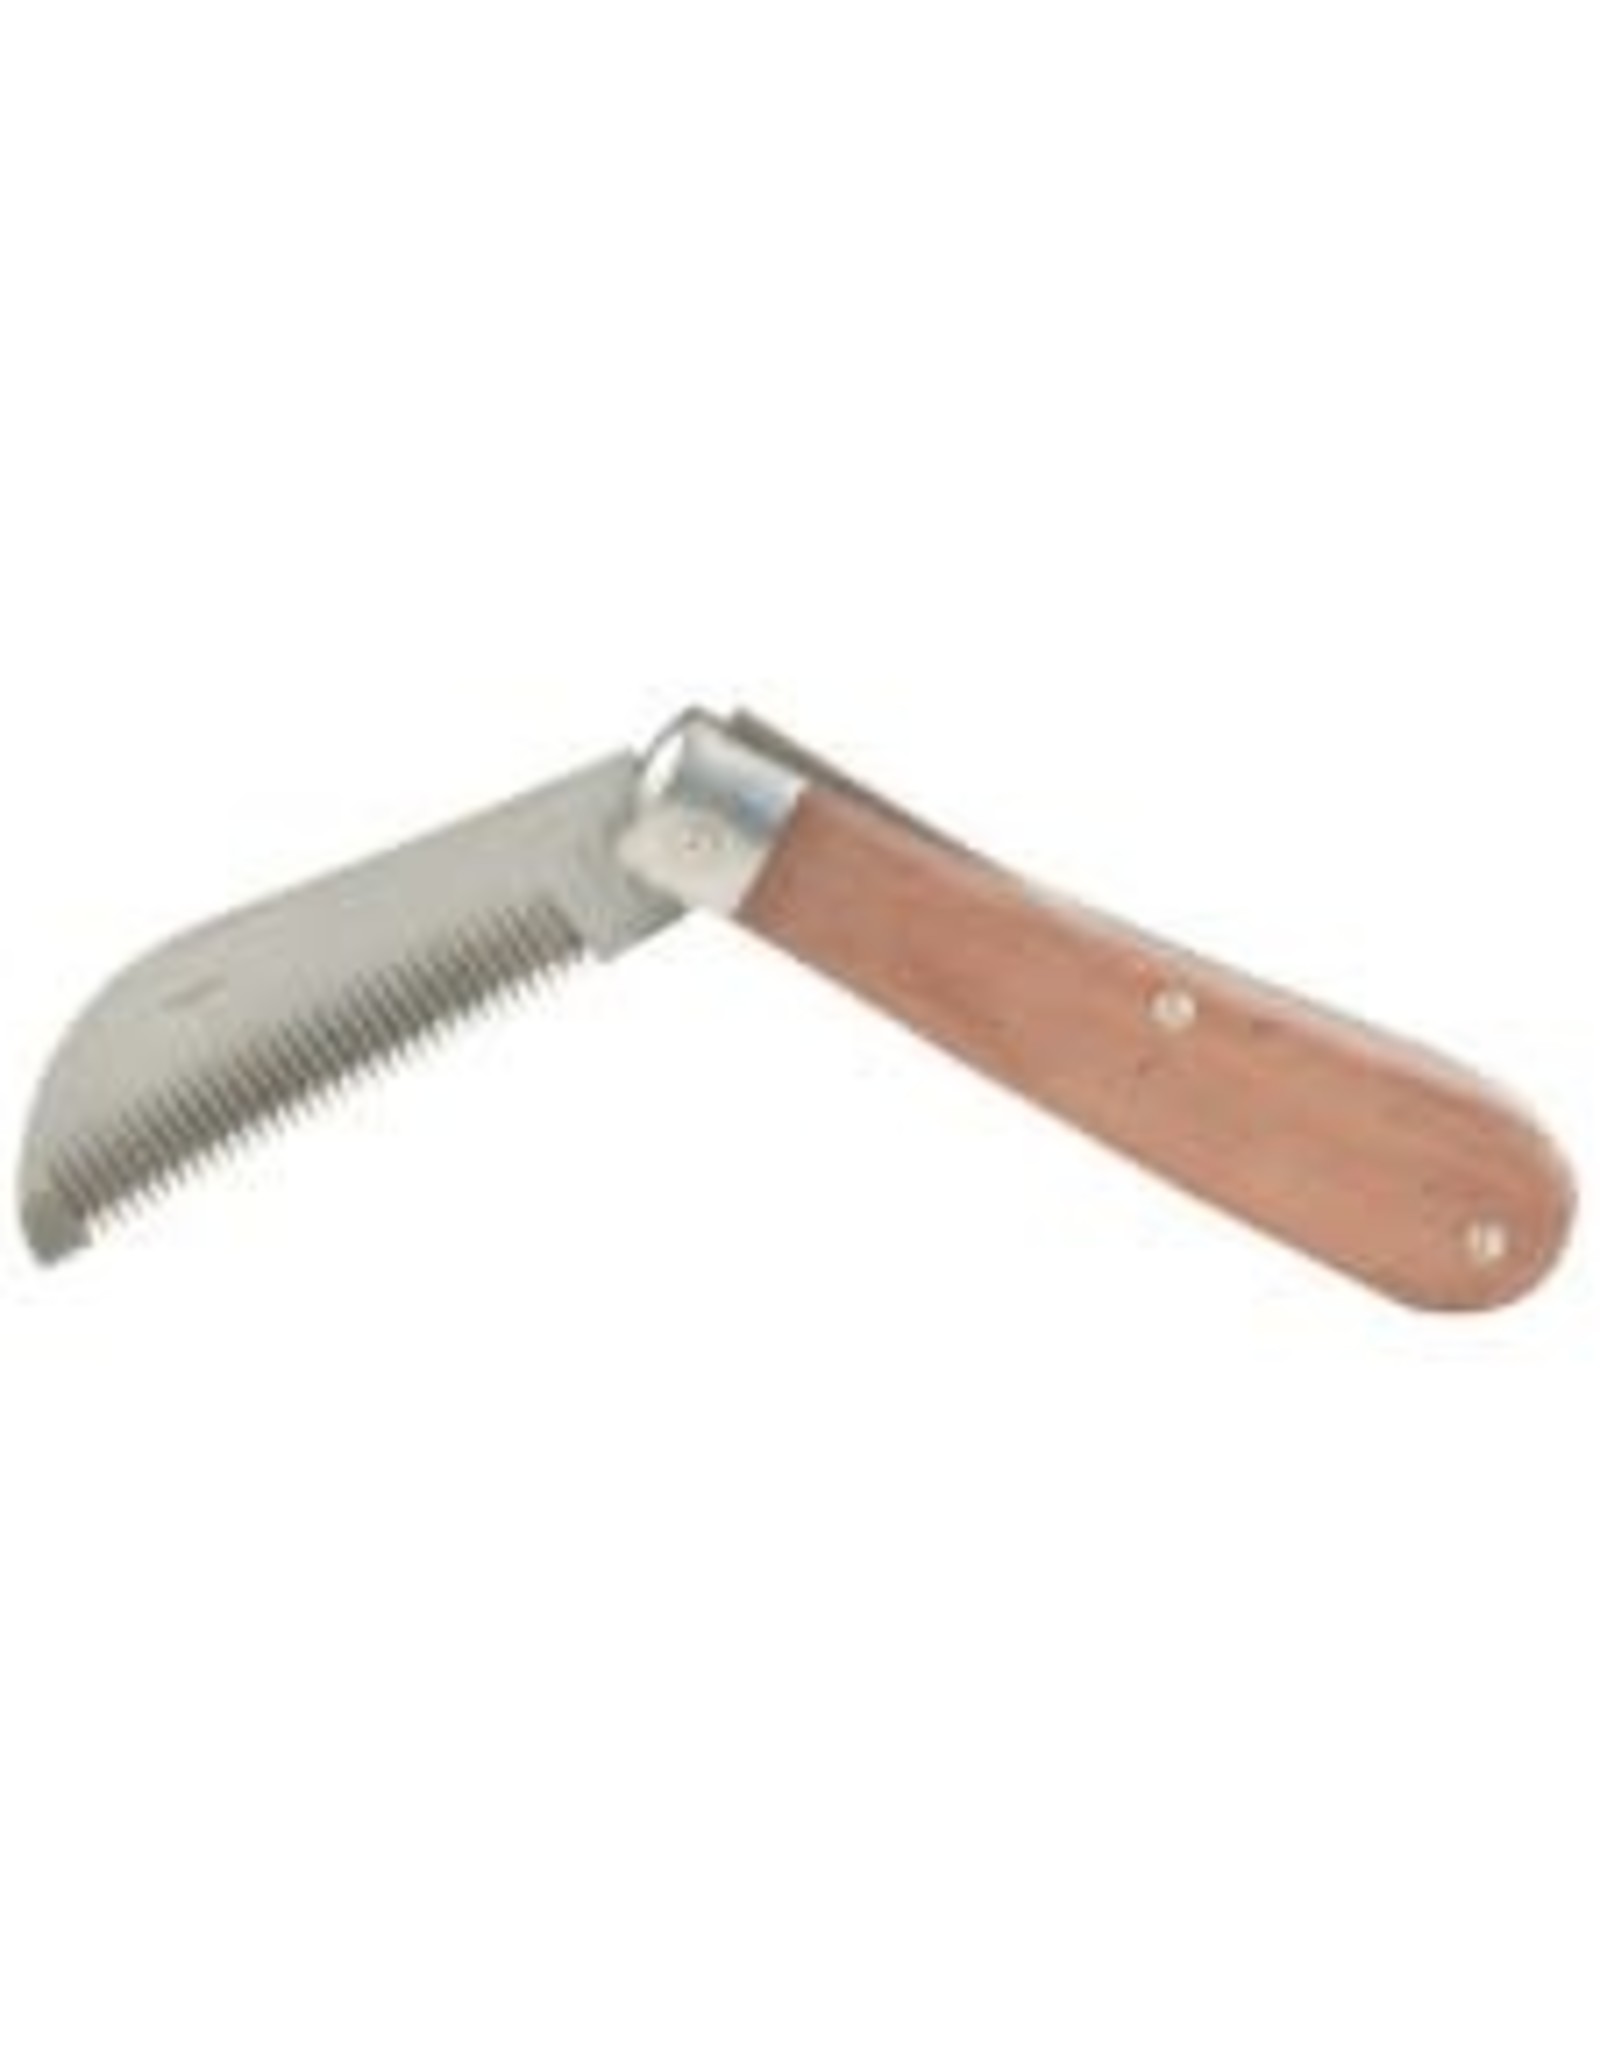 Thinning Knife - 374405